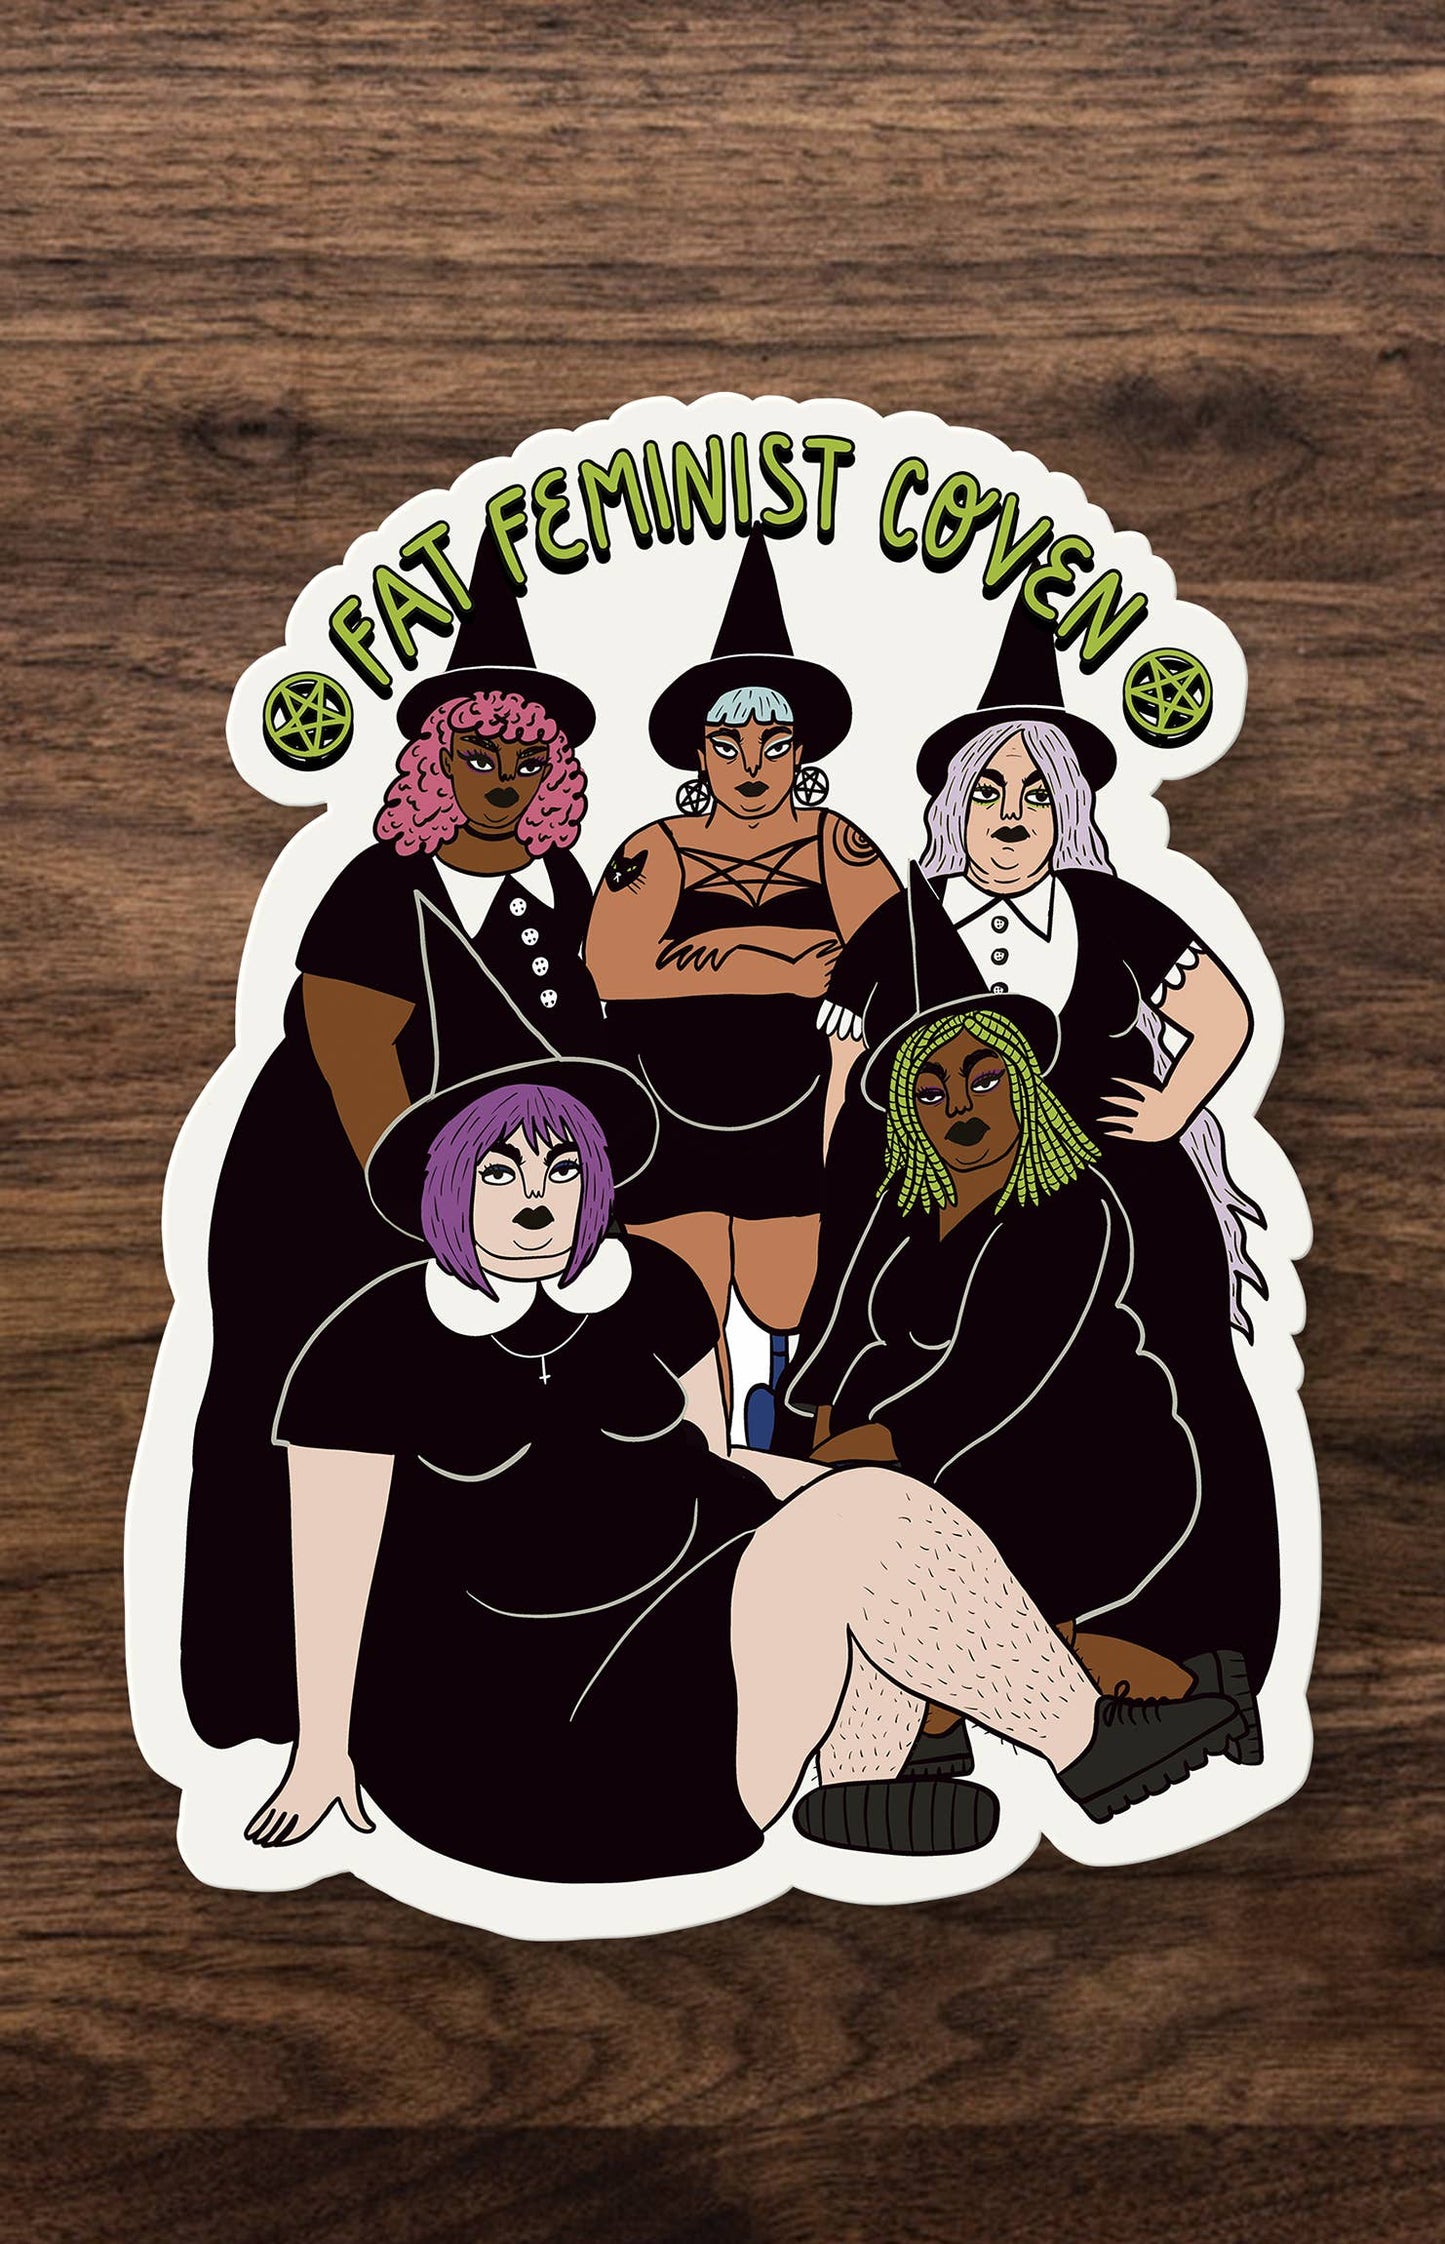 Chiaralascura - Fat feminist coven - Halloween feminist sticker